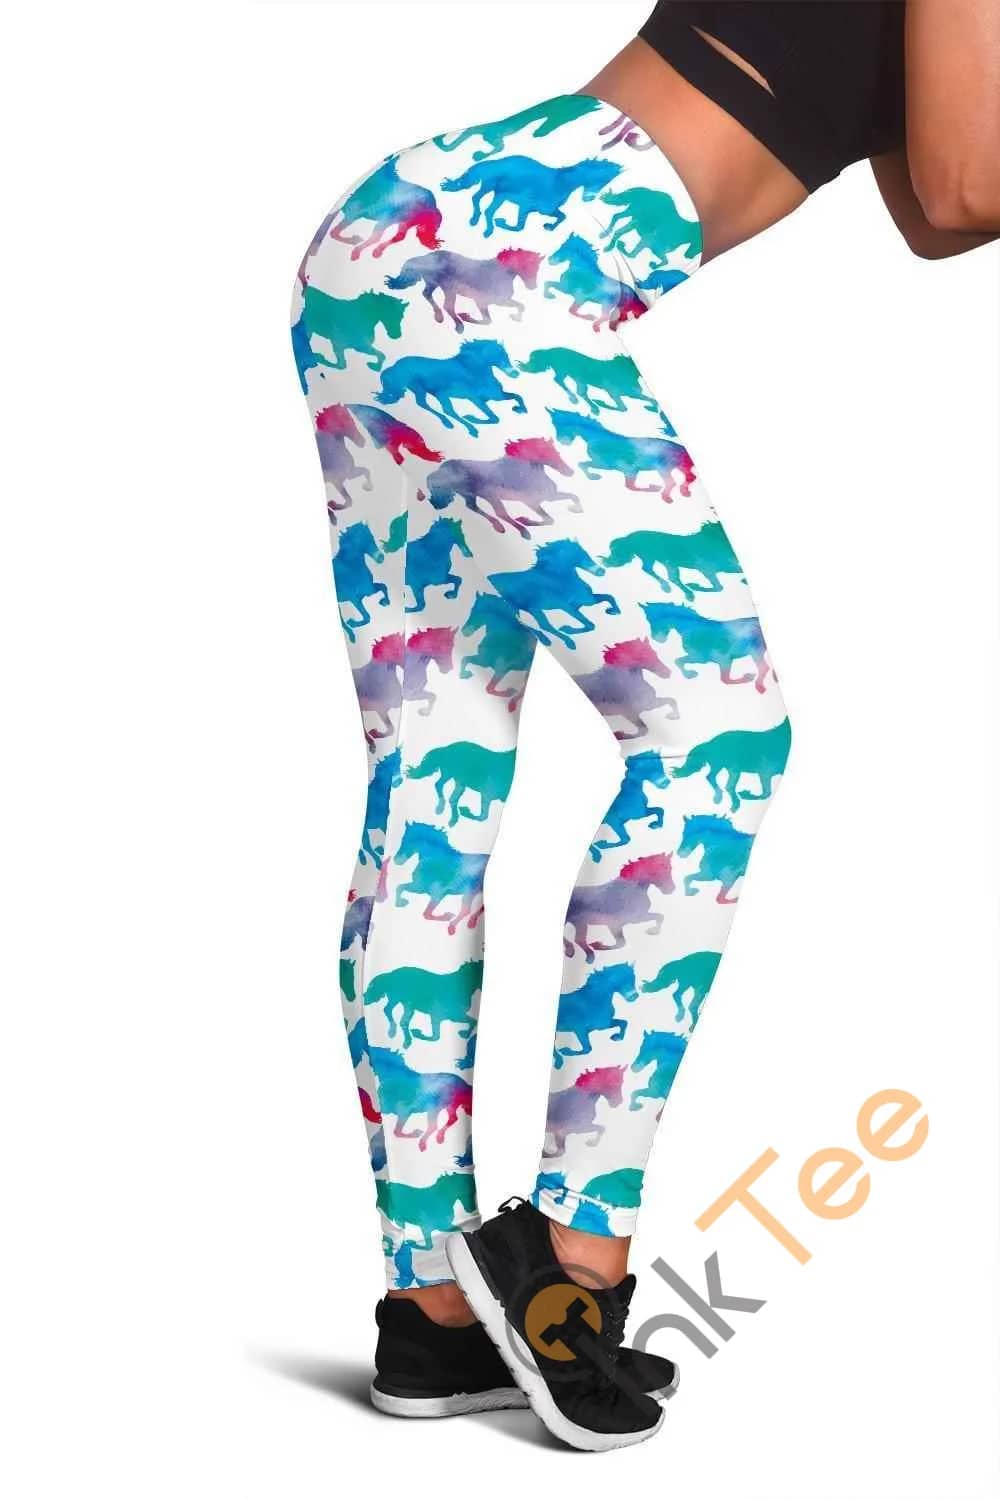 Colorful Horse 3D All Over Print For Yoga Fitness Women's Leggings